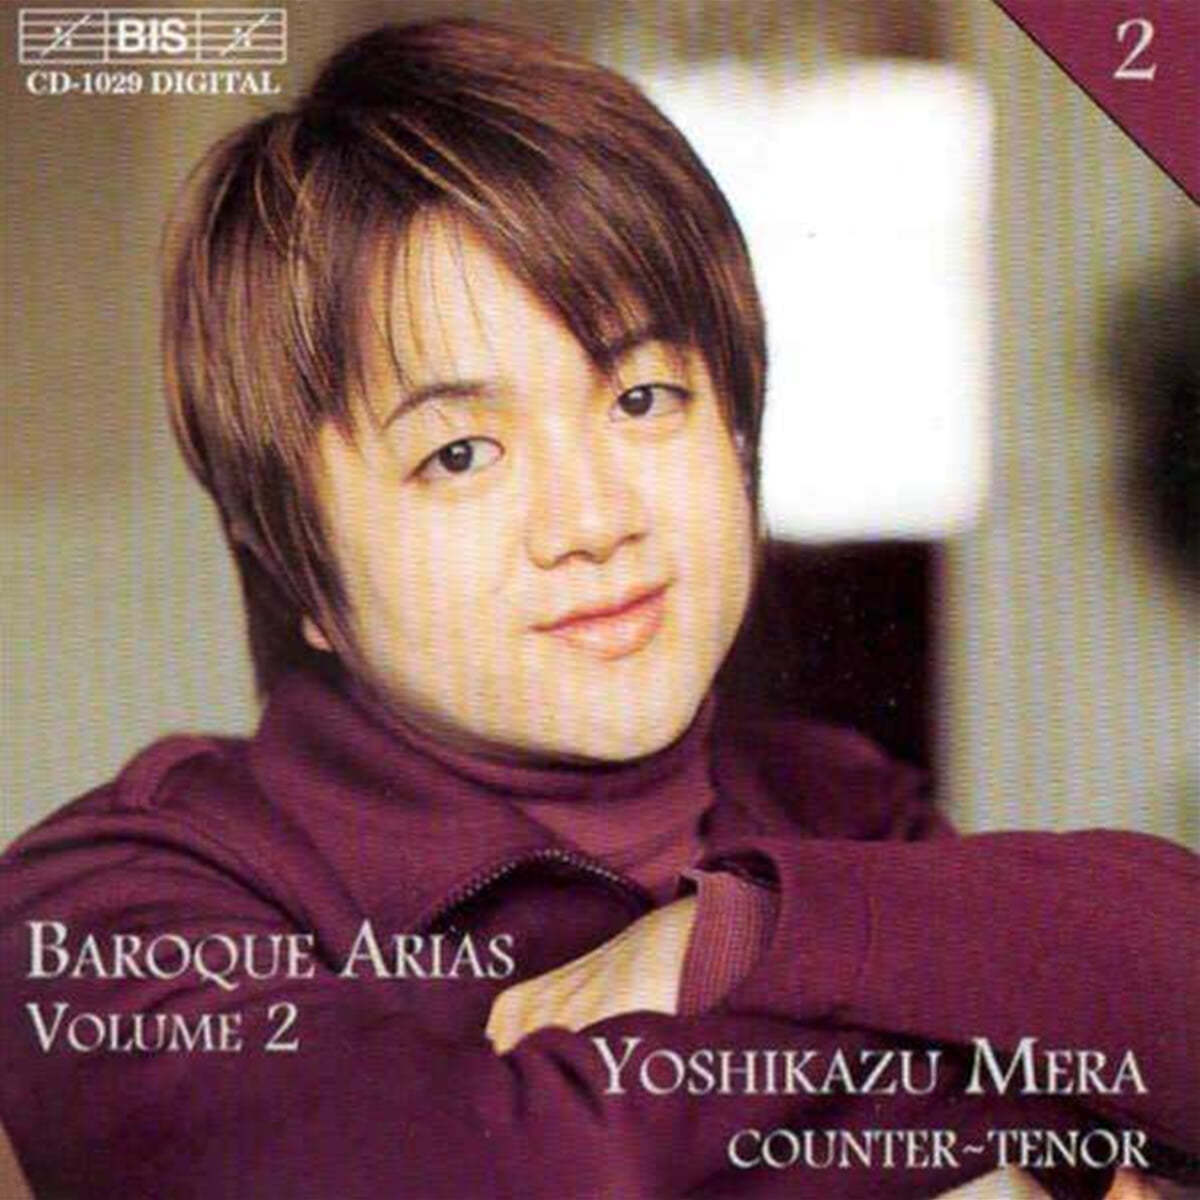 Yoshikazu Mera 바로크 아리아 2집 - 요시카츠 메라 (Baroque Arias II)